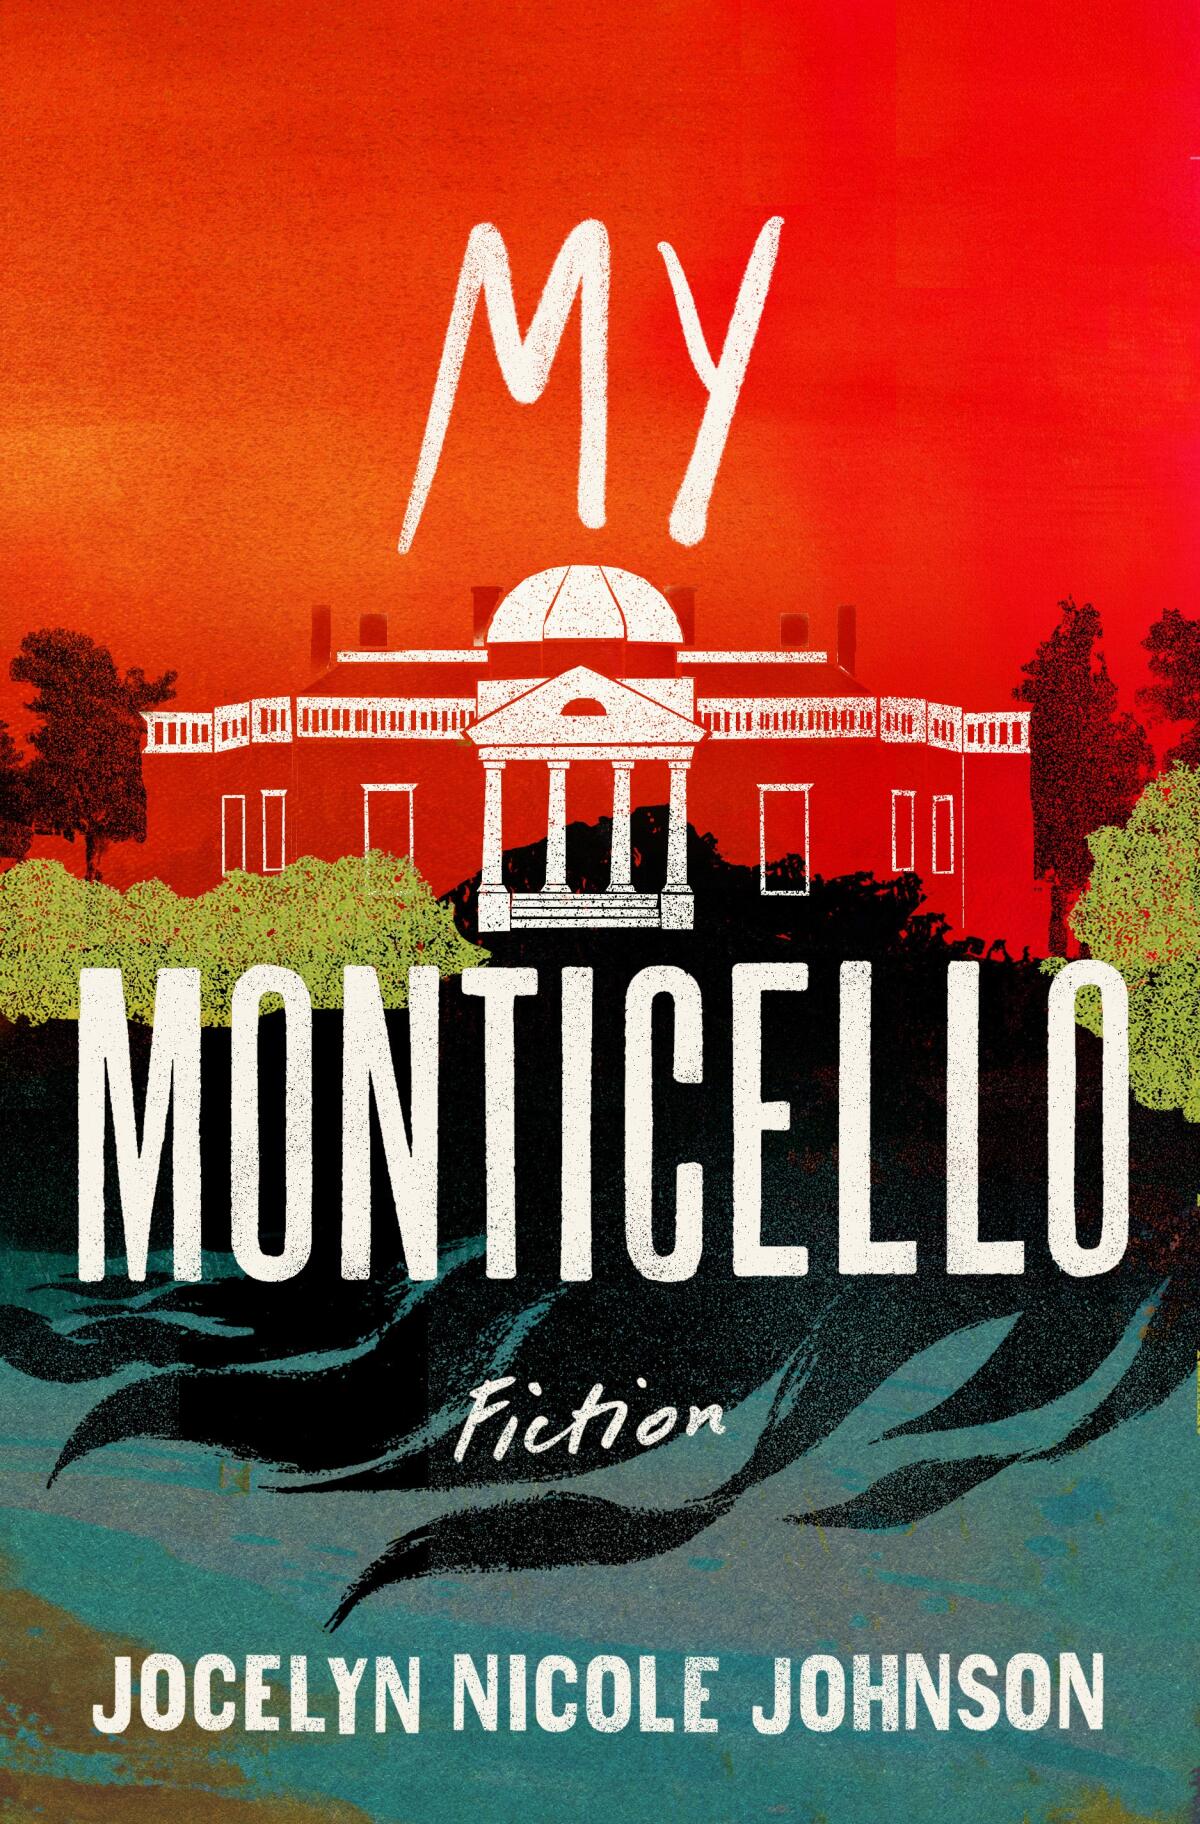 "My Monticello," by Jocelyn Nicole Johnson